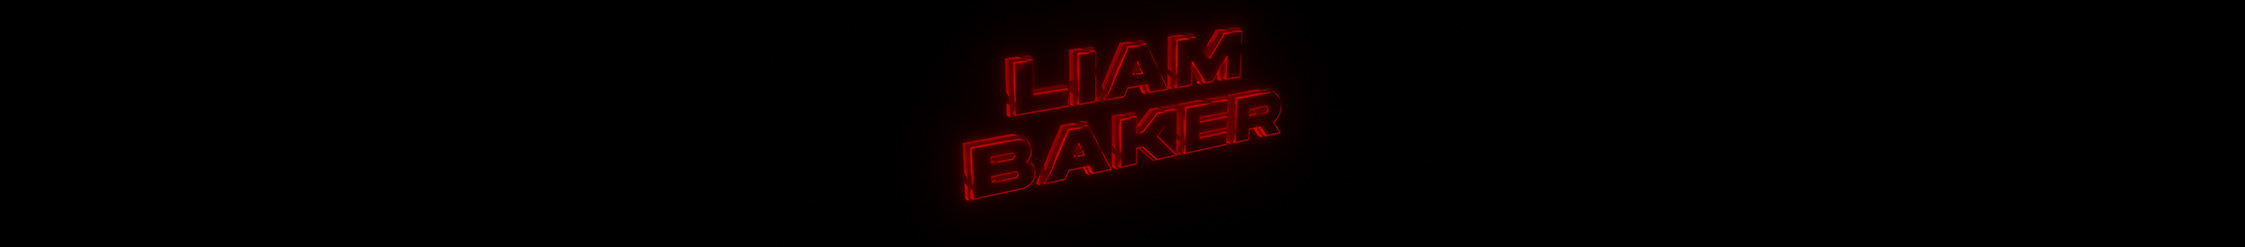 Liam Baker's profile banner